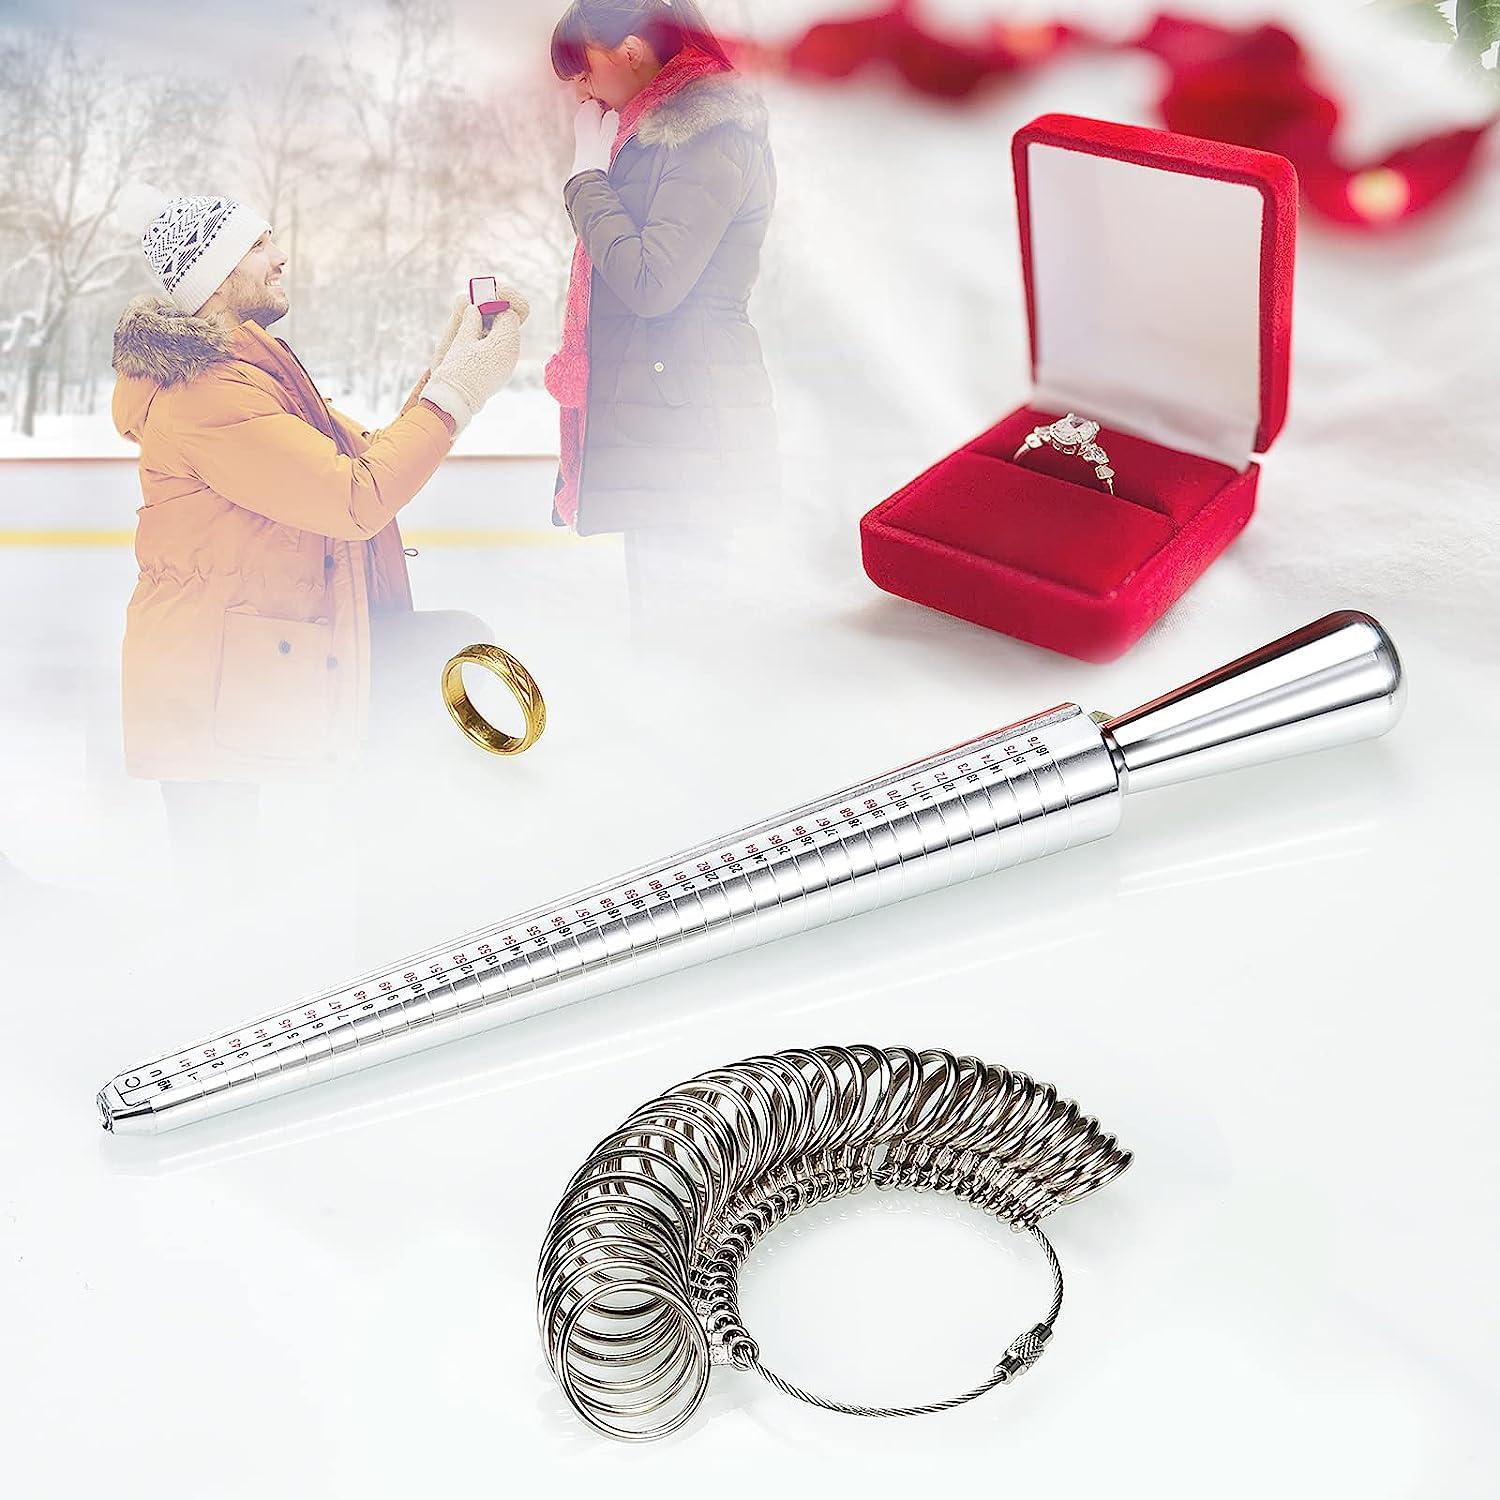  Ring Size Measuring Tool Metal Ring Mandrel Ring Sizer Guage  Ring Measurements and Finger Measurements Kit : Arts, Crafts & Sewing